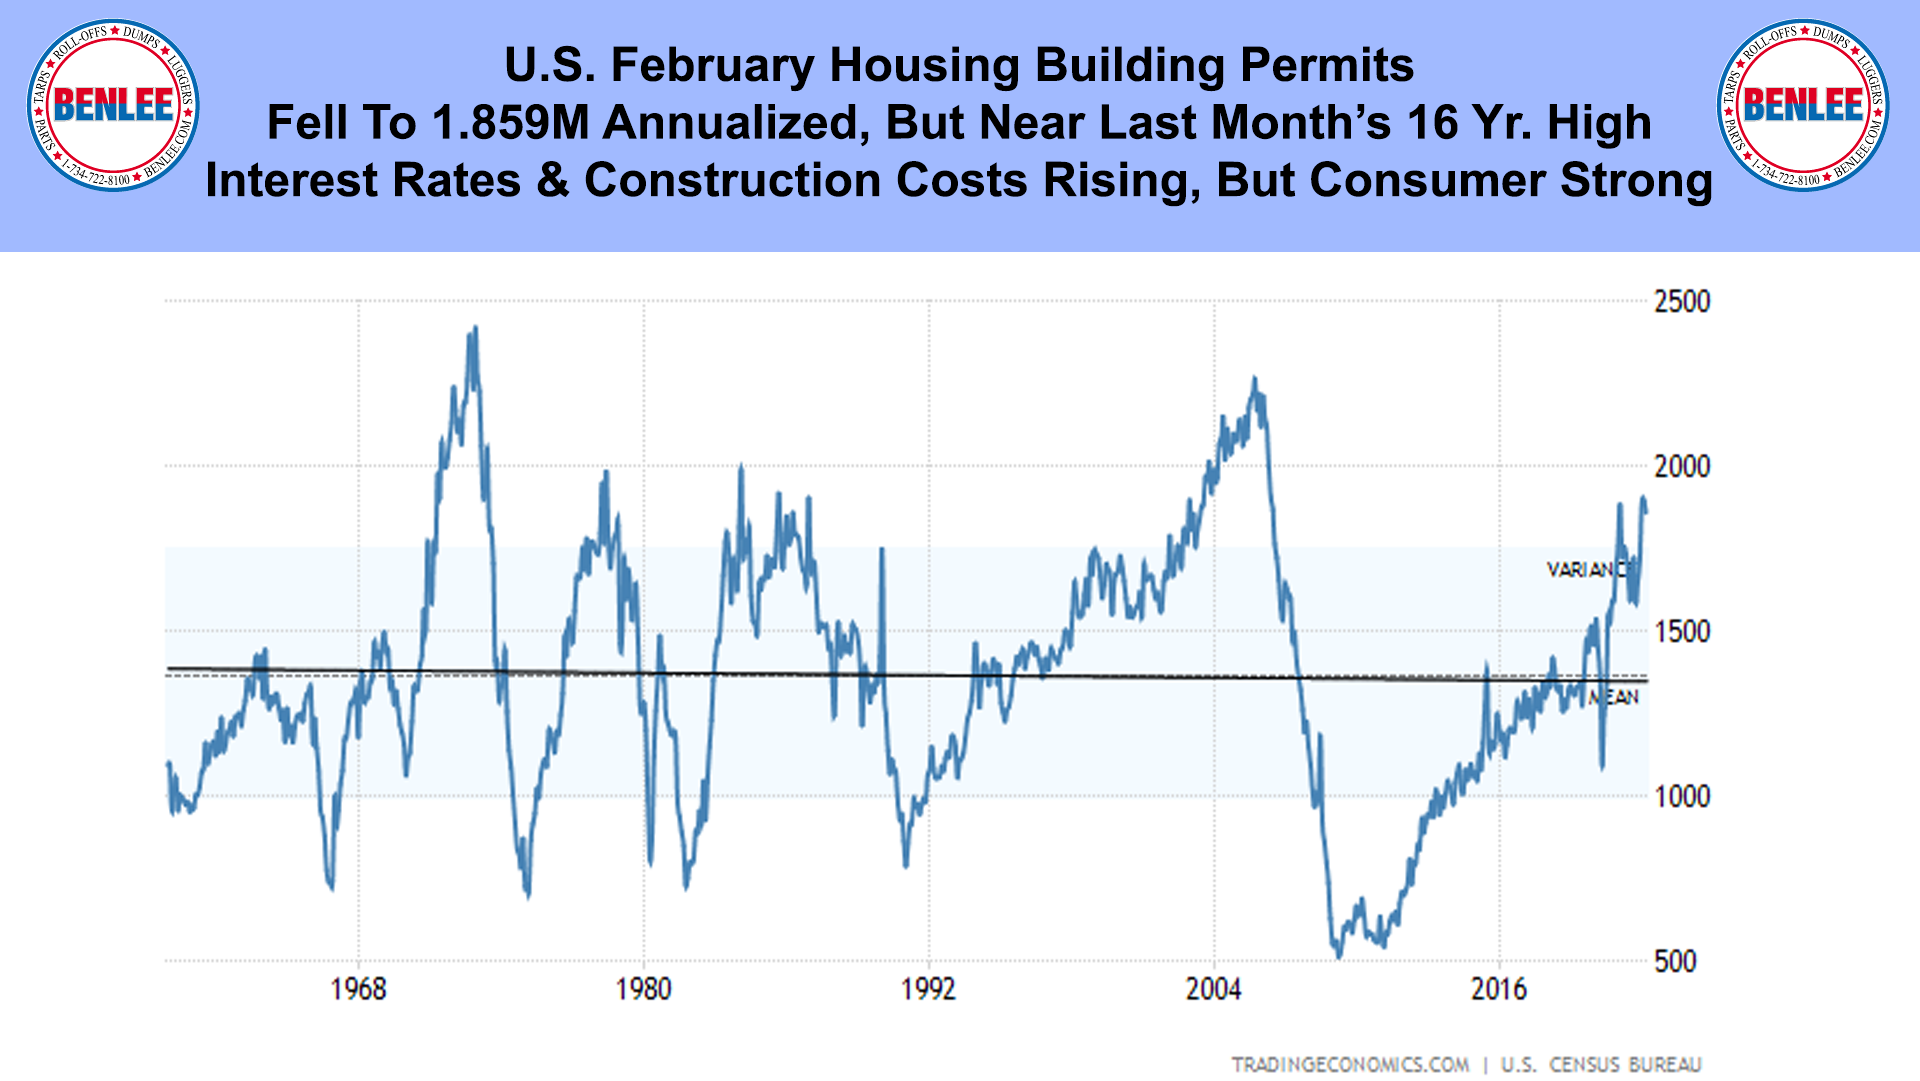 U.S. February Housing Building Permits